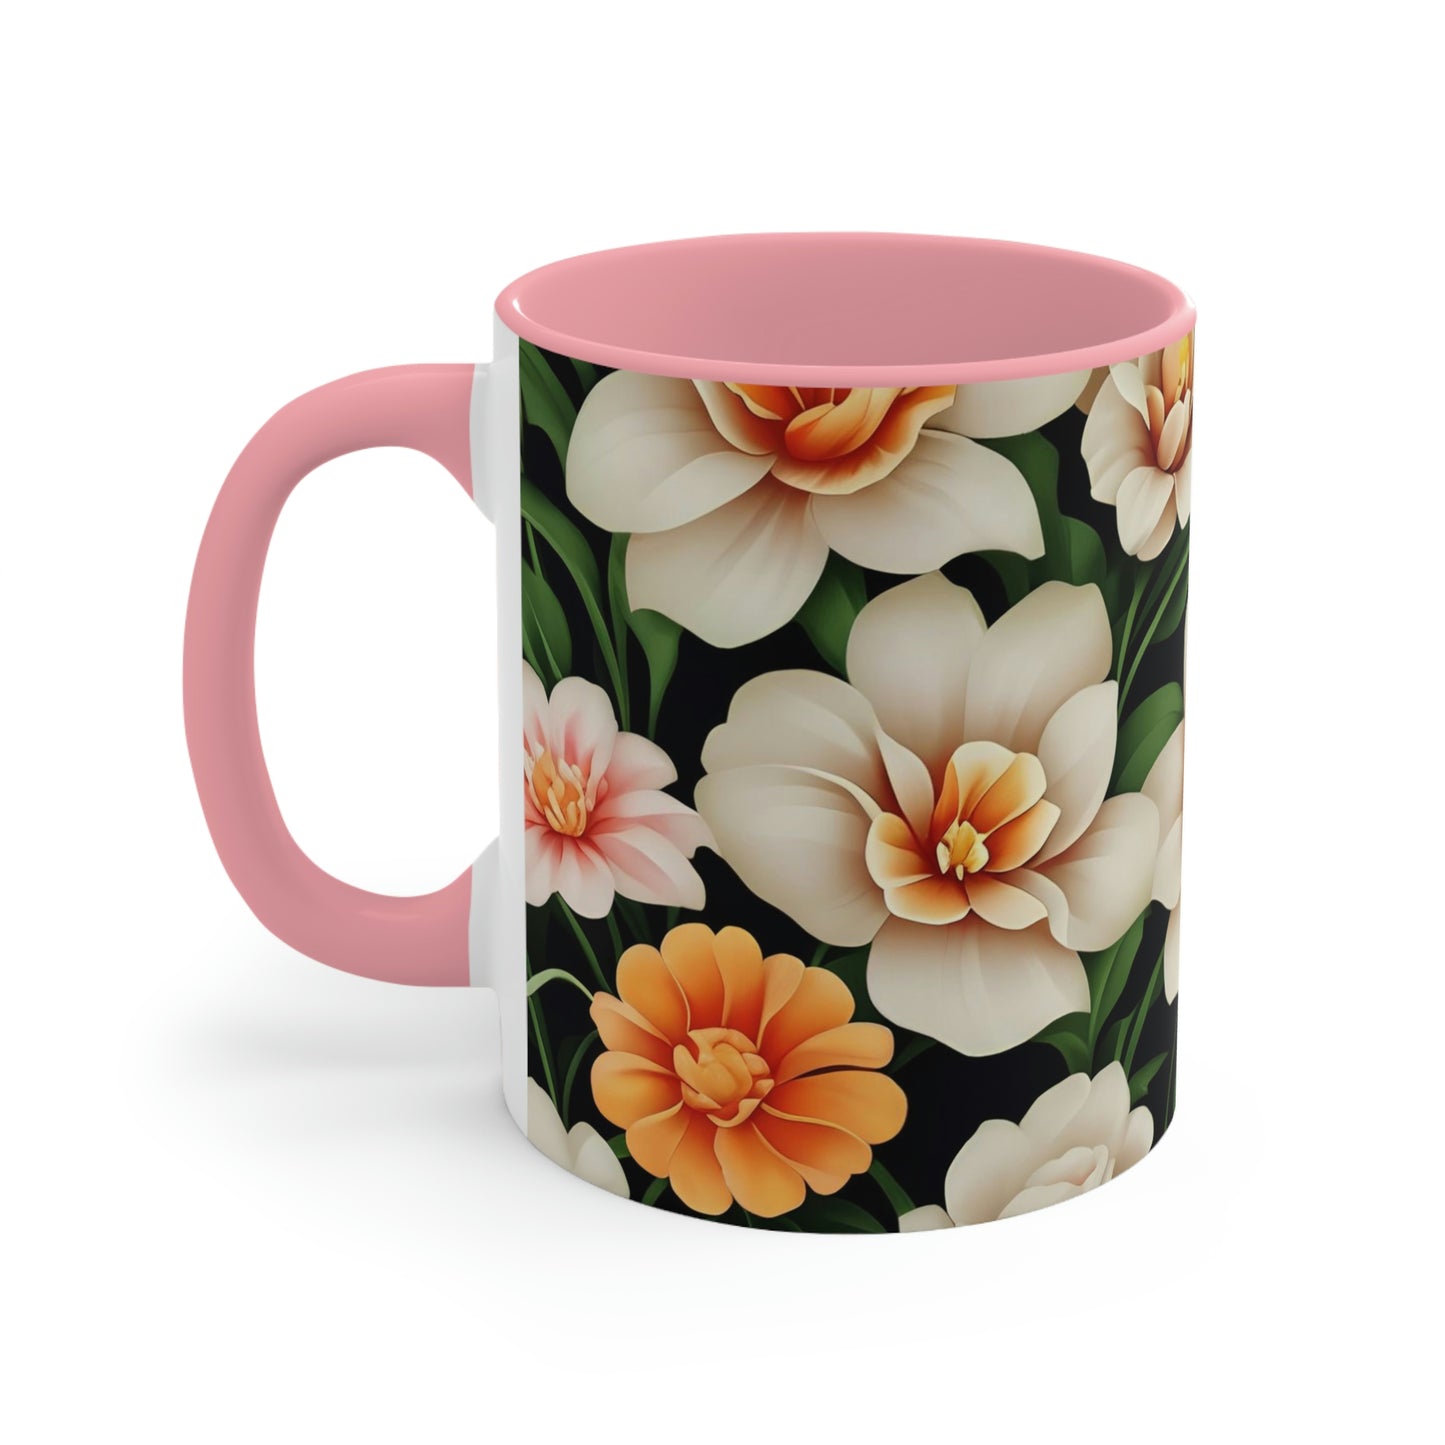 White Flowers, Ceramic Mug - Perfect for Coffee, Tea, and More!